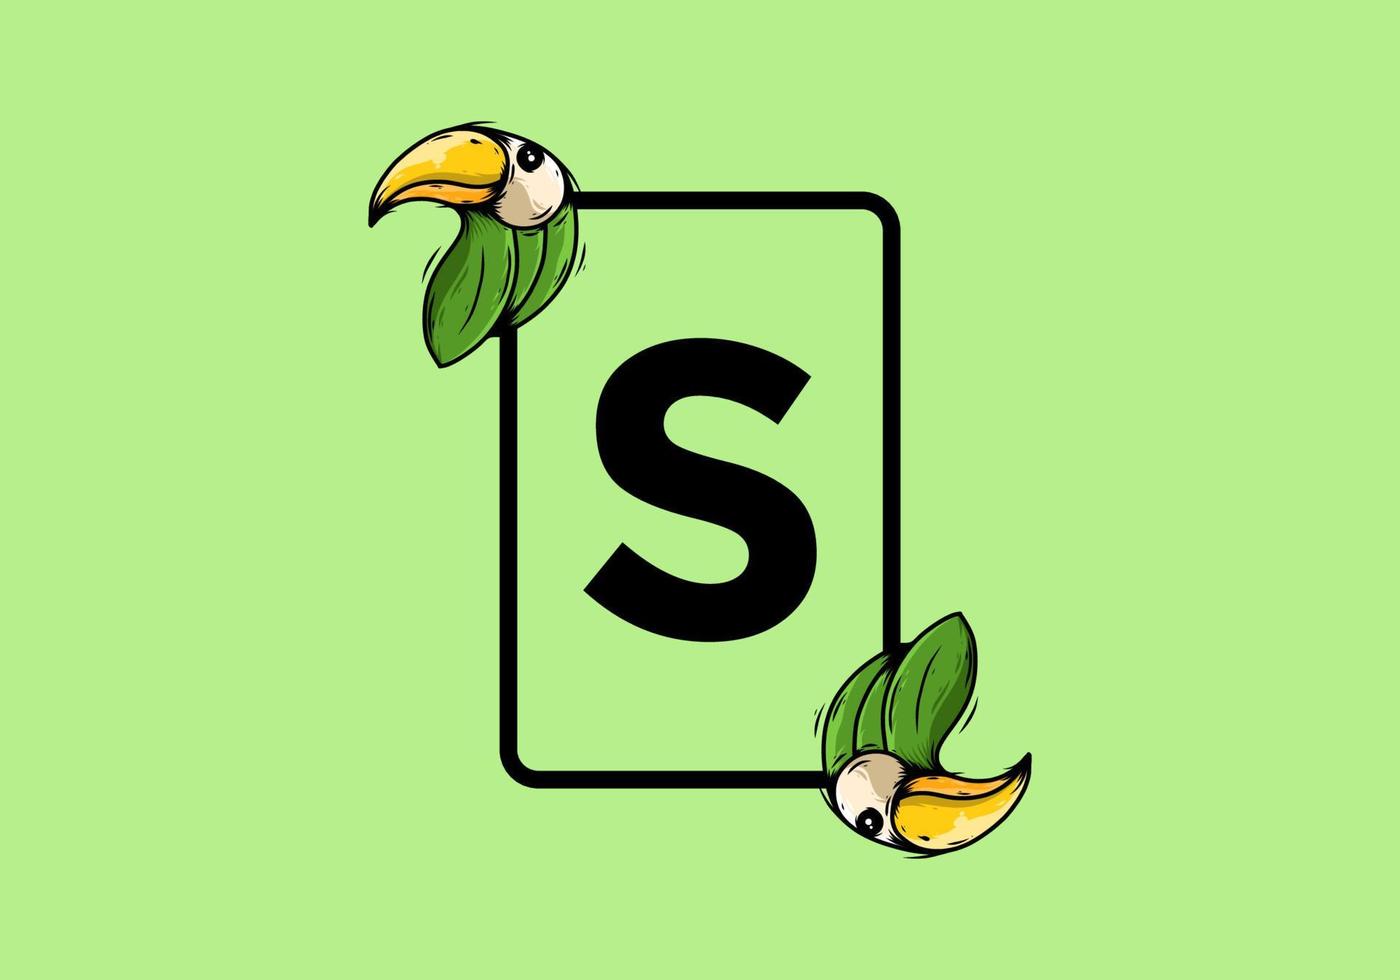 grüner vogel mit s-anfangsbuchstaben vektor